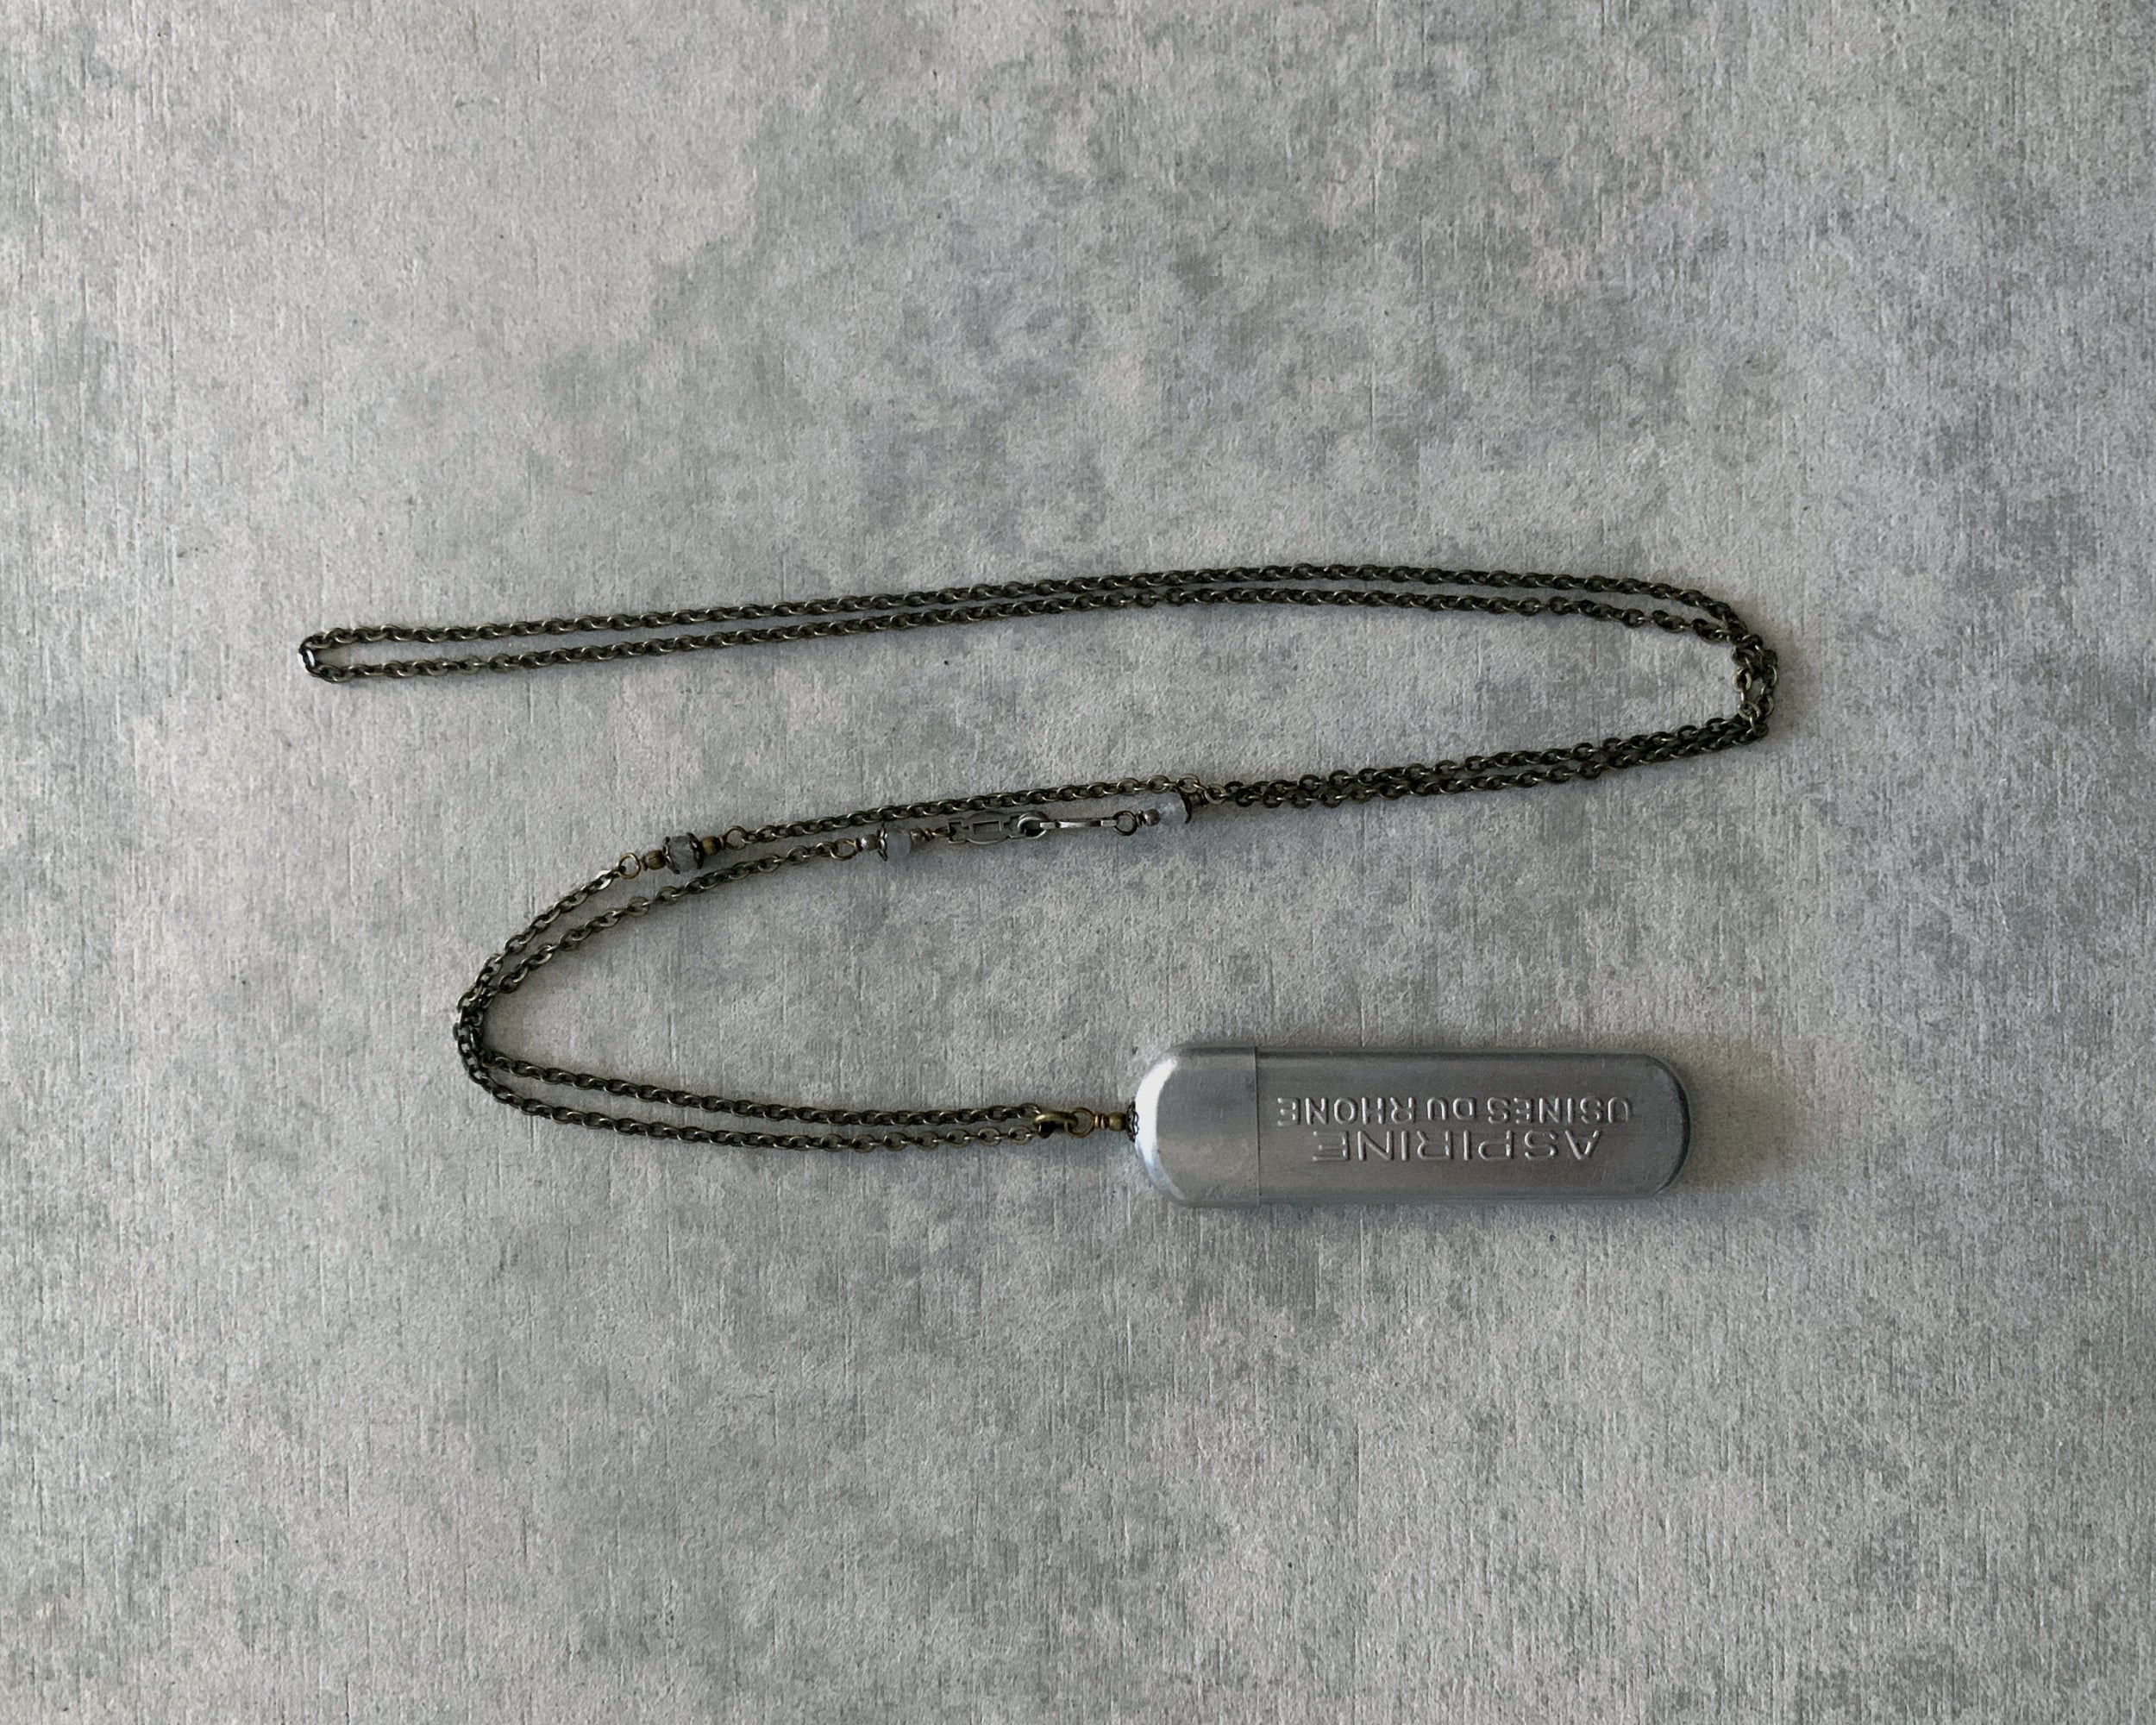 tabito : brass necklace with vintage aspirine case pendant